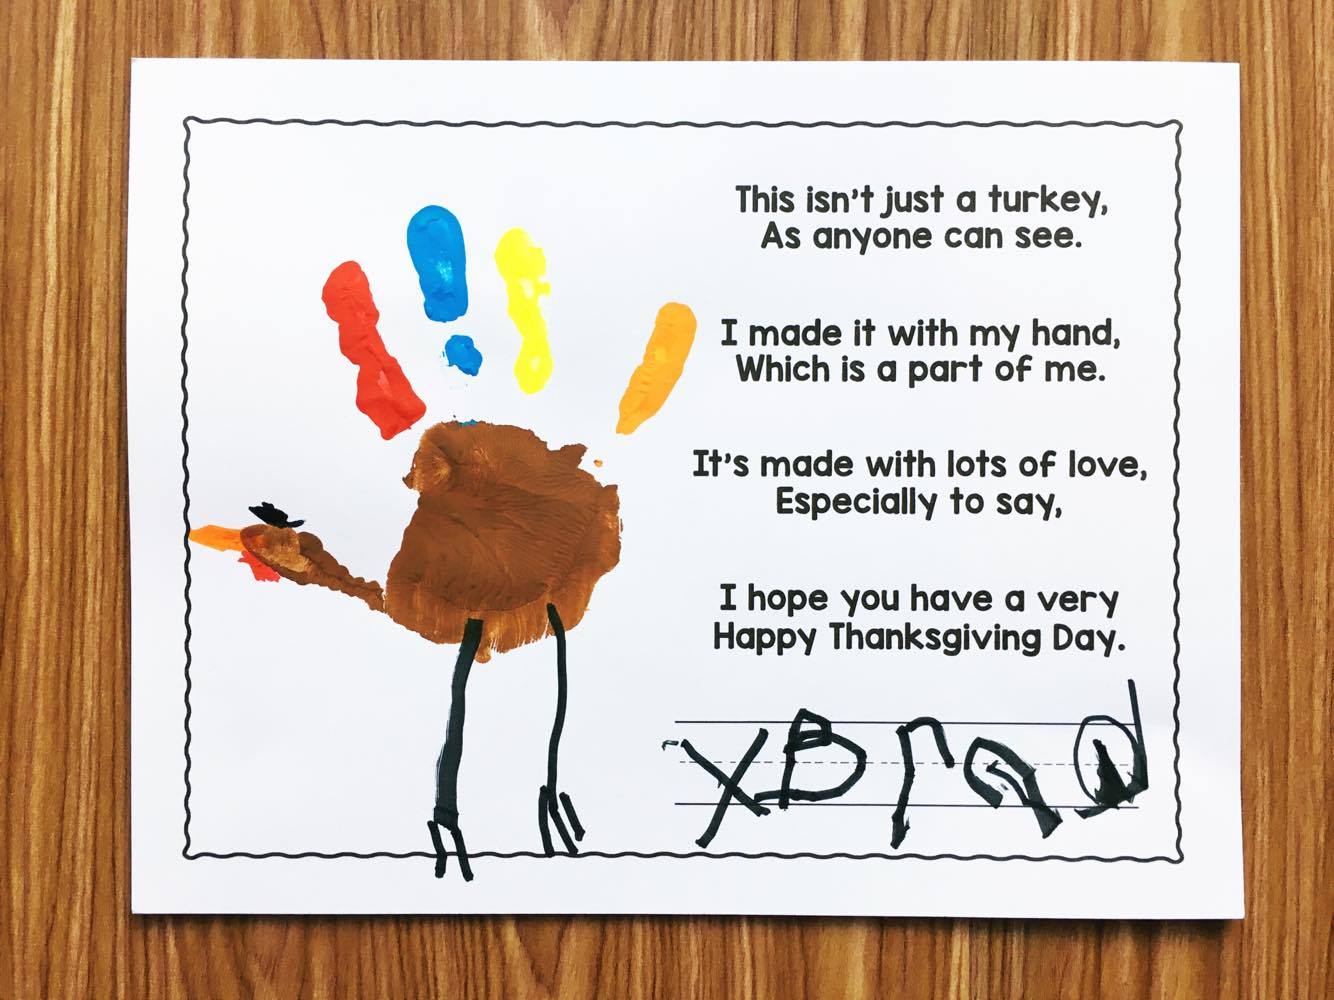 Free Turkey Handprint Poem for Thanksgiving. Great for preschool, kindergarten, and first grades.